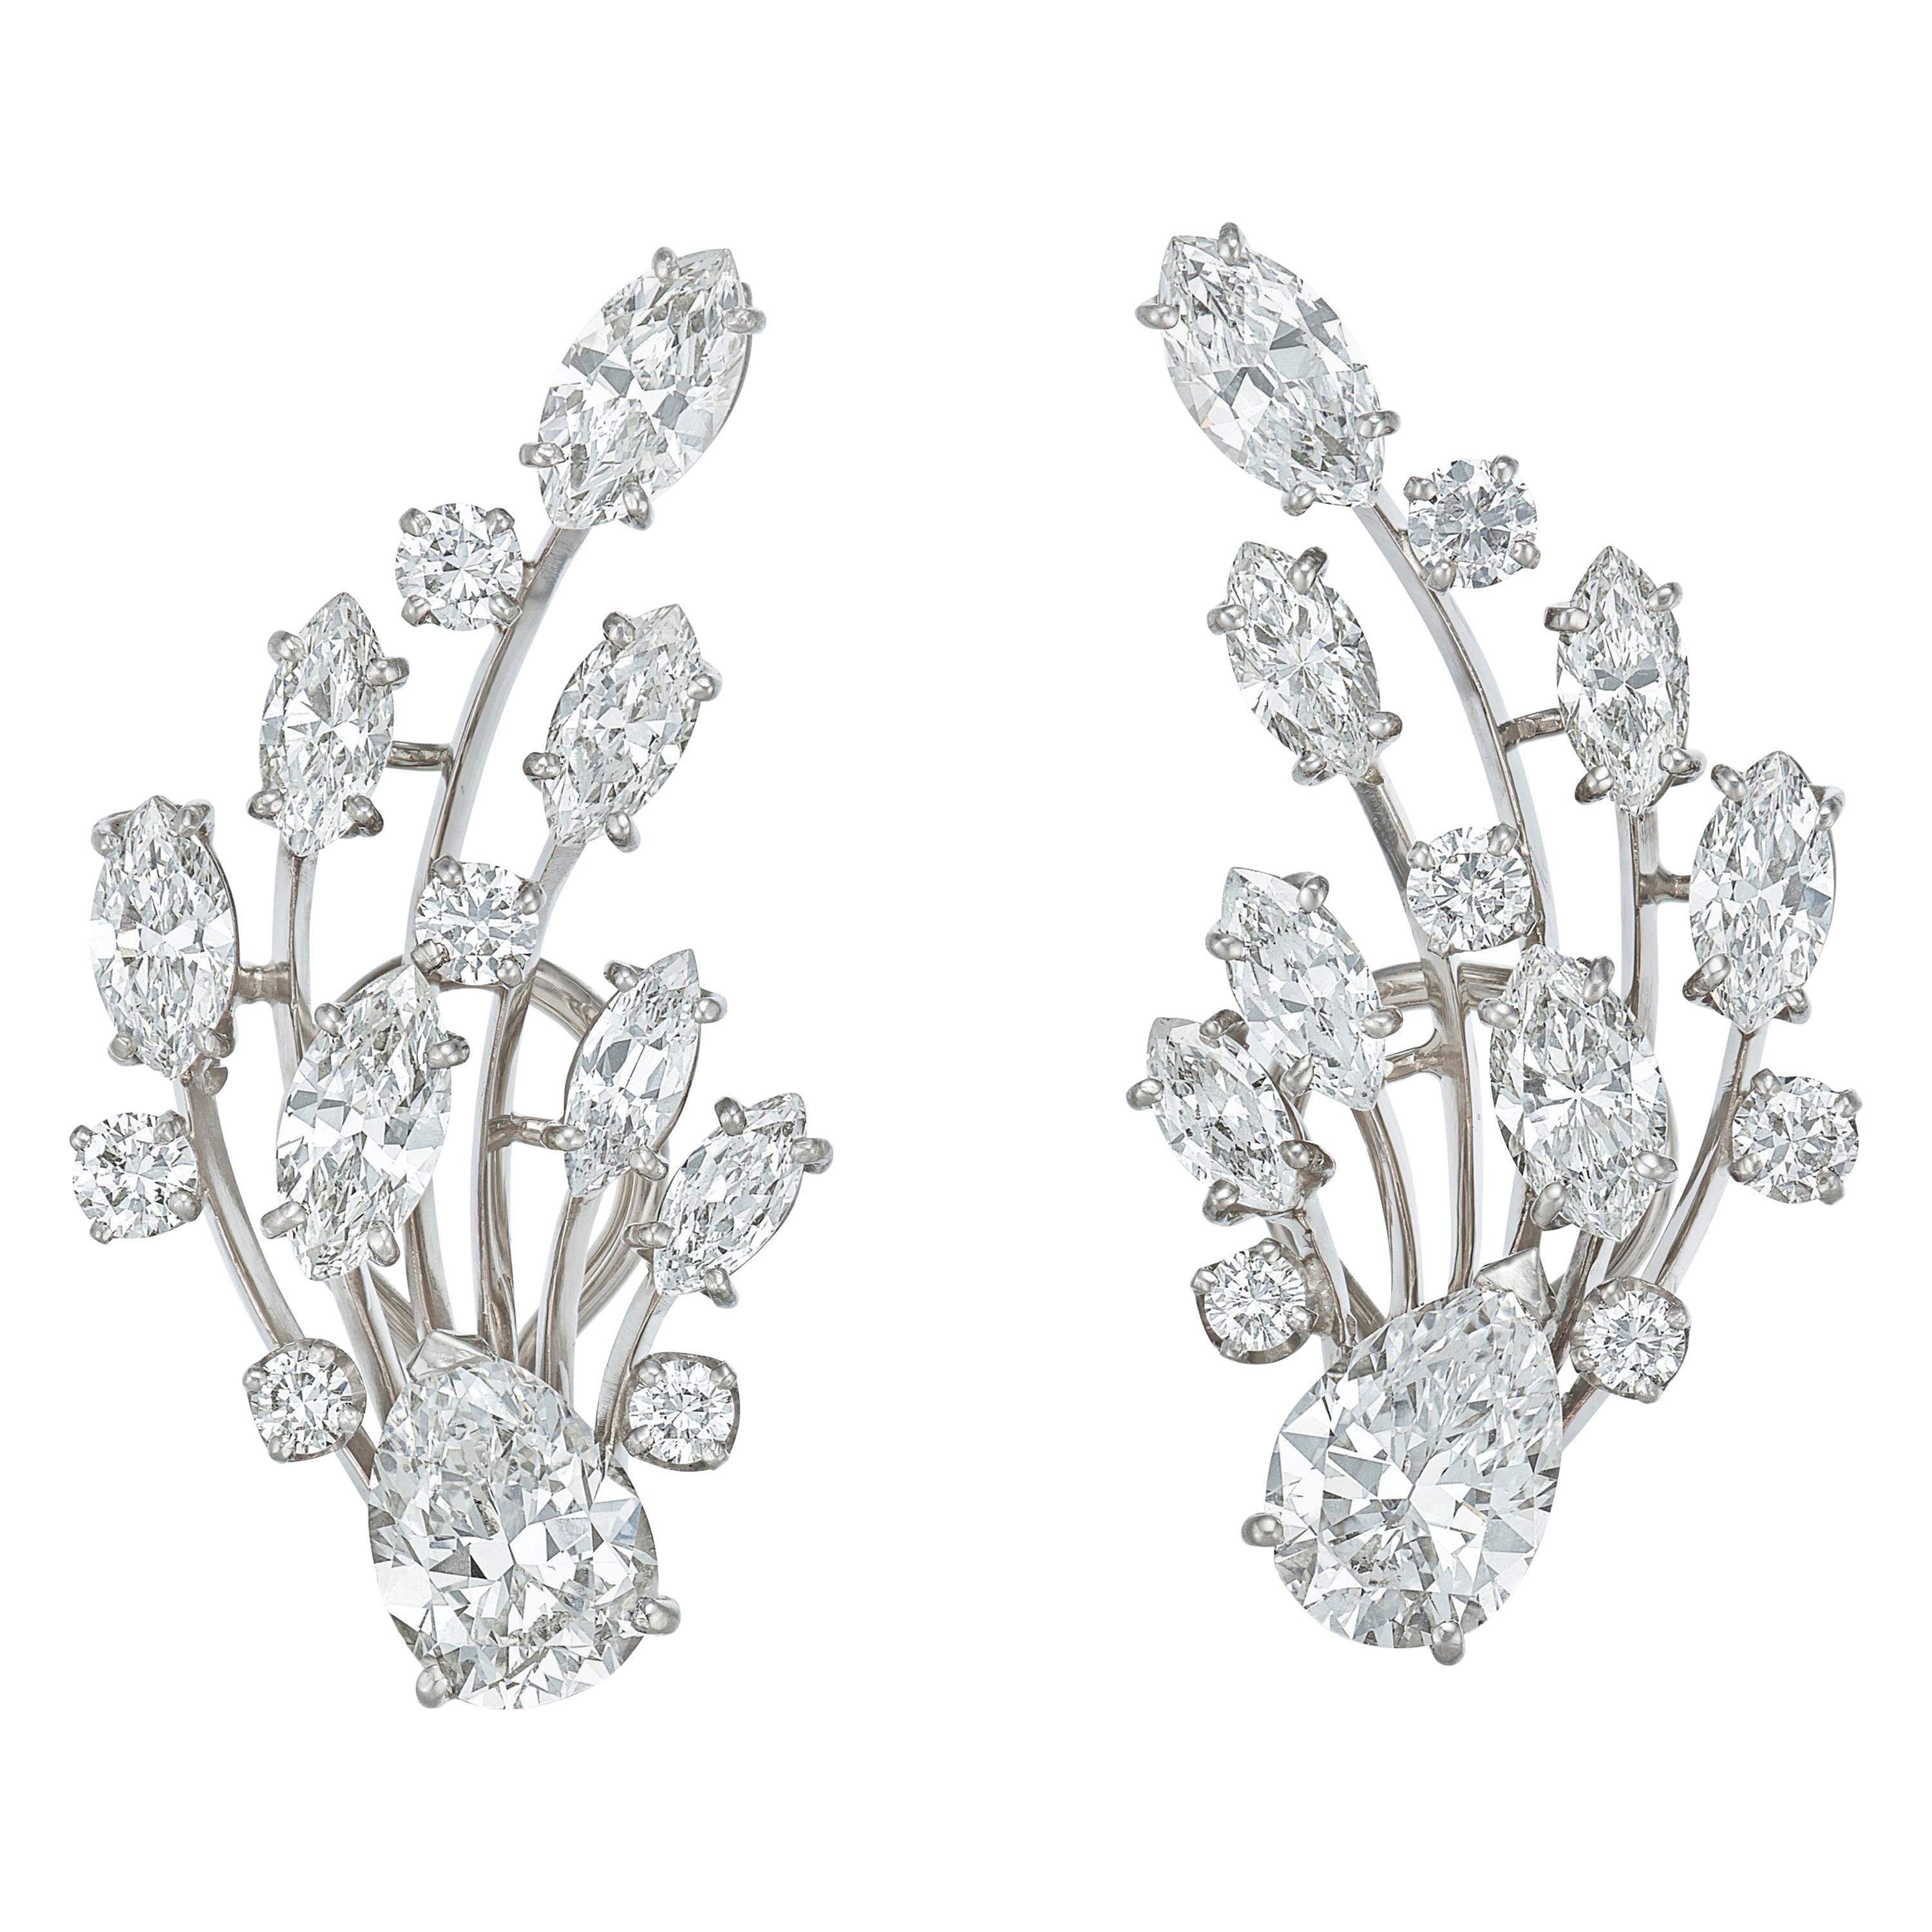 Pear and Marquise Cut Diamond Earrings